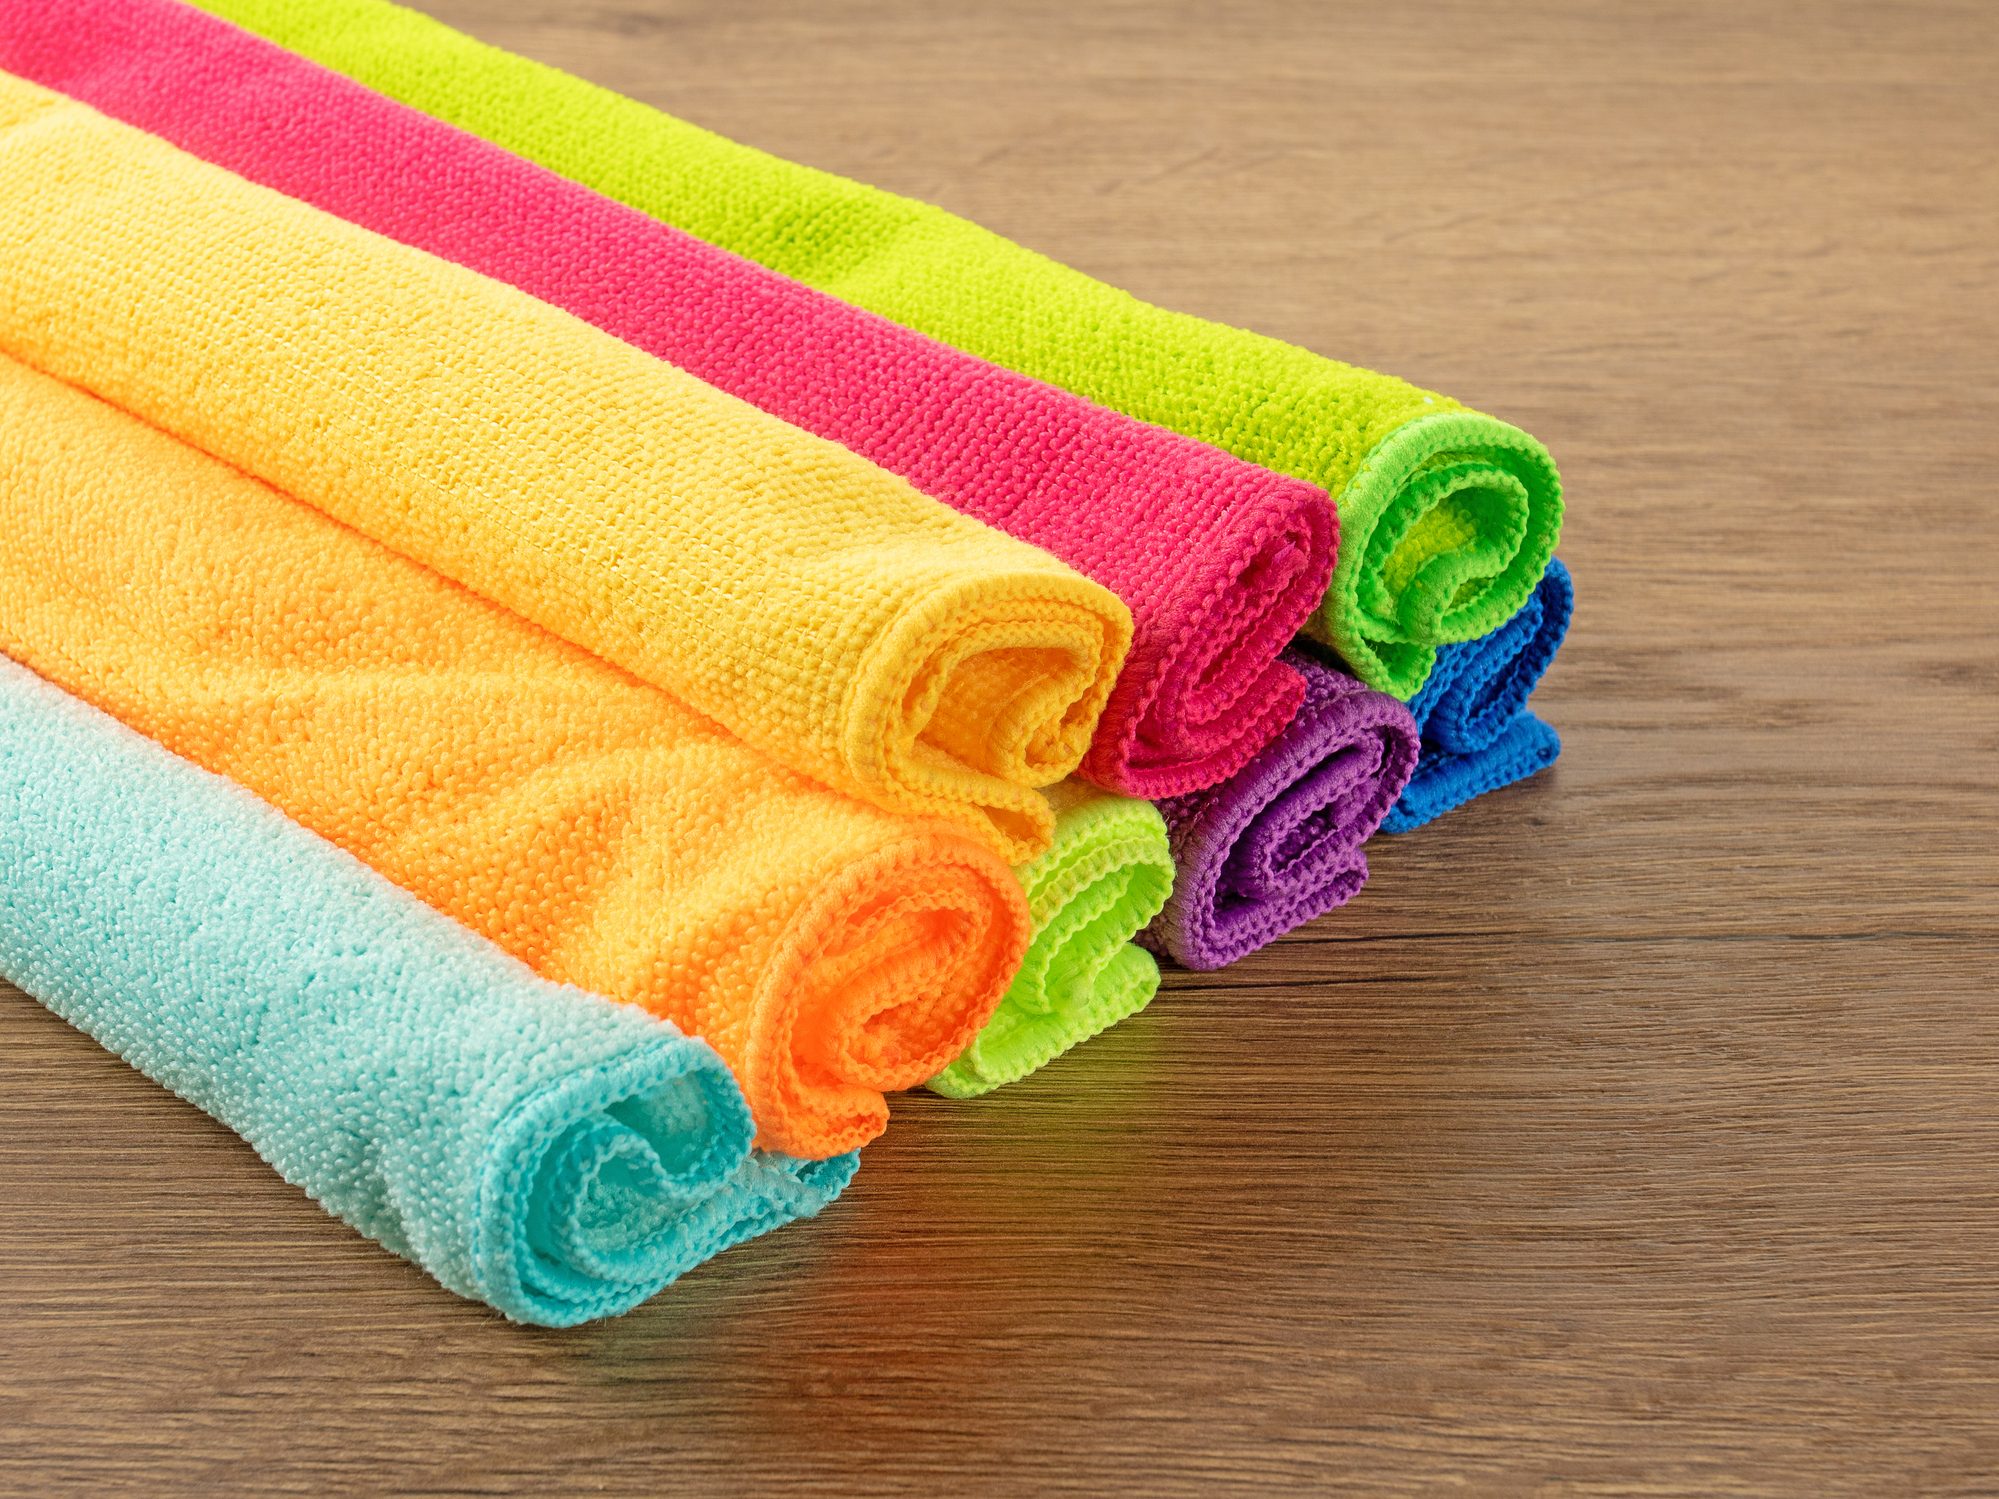 How Often Should You Wash Microfiber Towels?